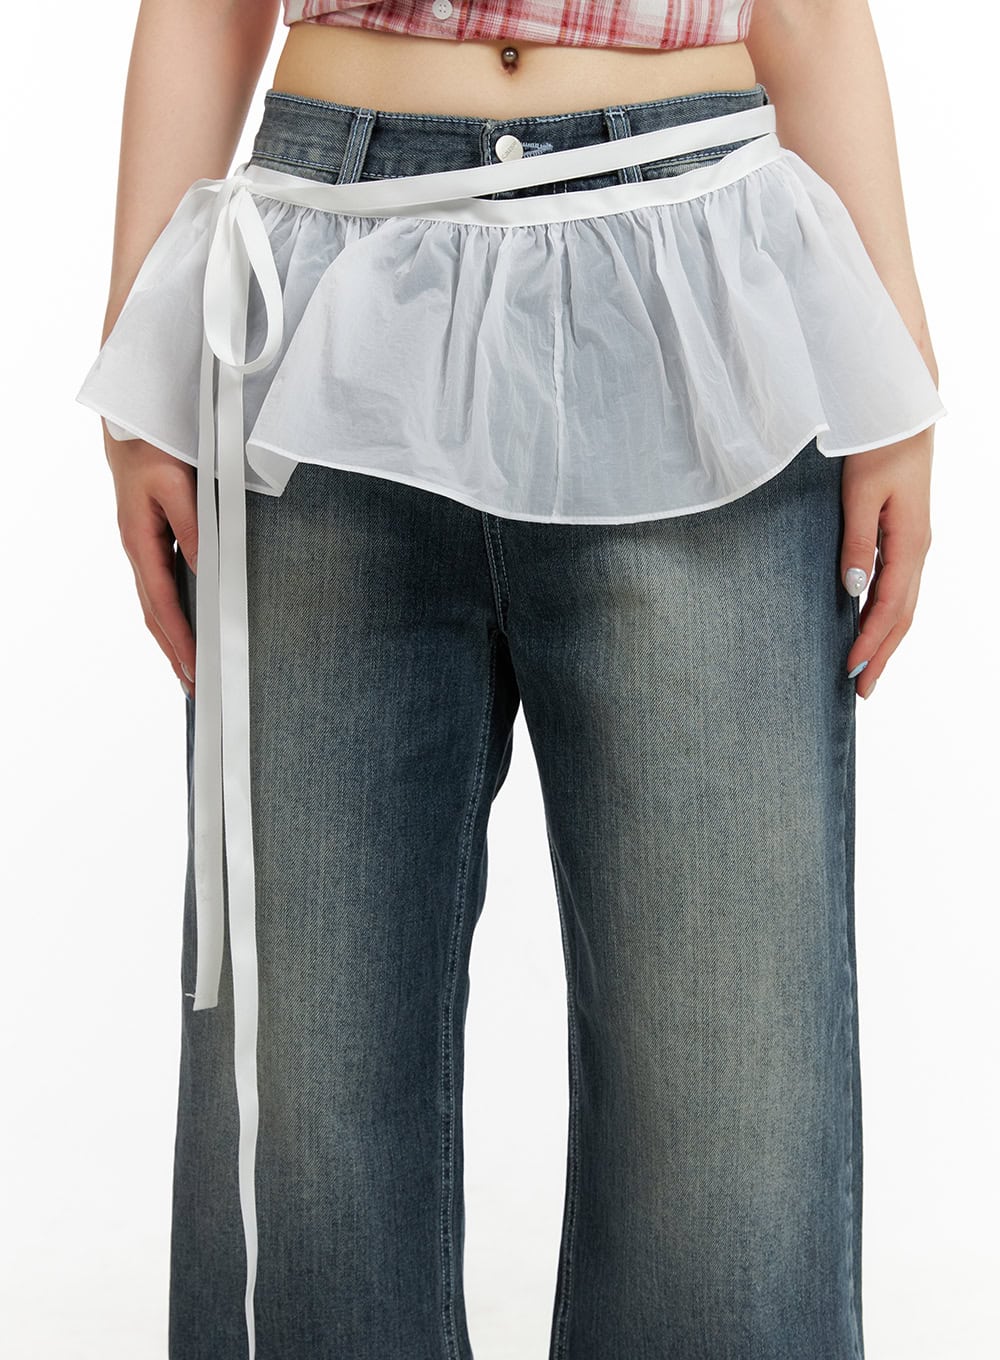 sheer-frill-mini-skirt-wrap-cu425 / White